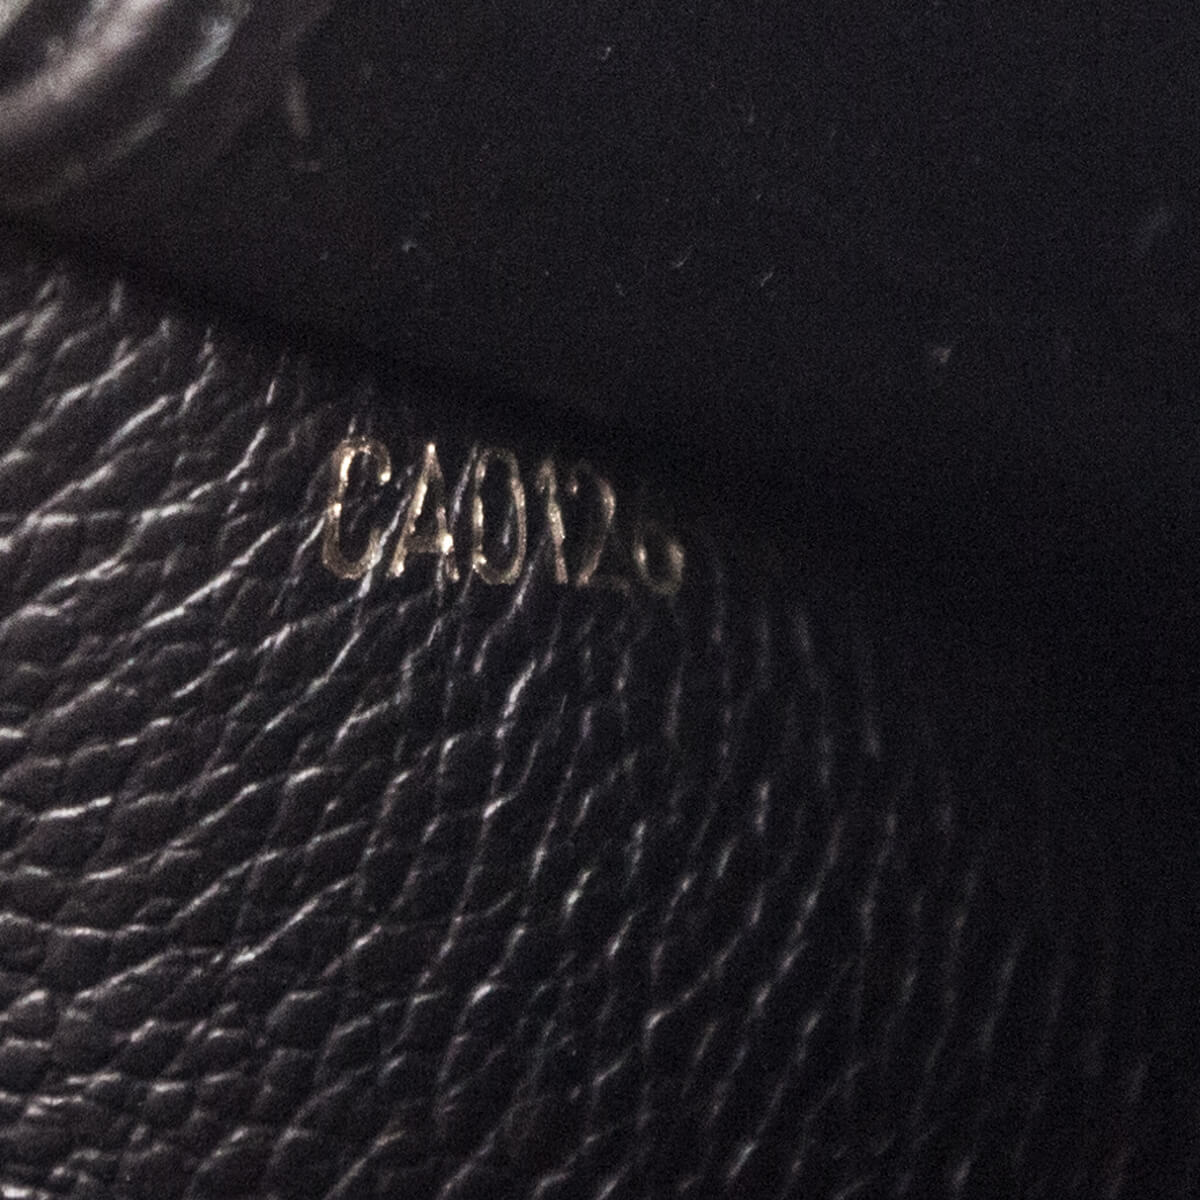 Shop Louis Vuitton MONOGRAM EMPREINTE Sarah wallet (M80496) by iRodori03